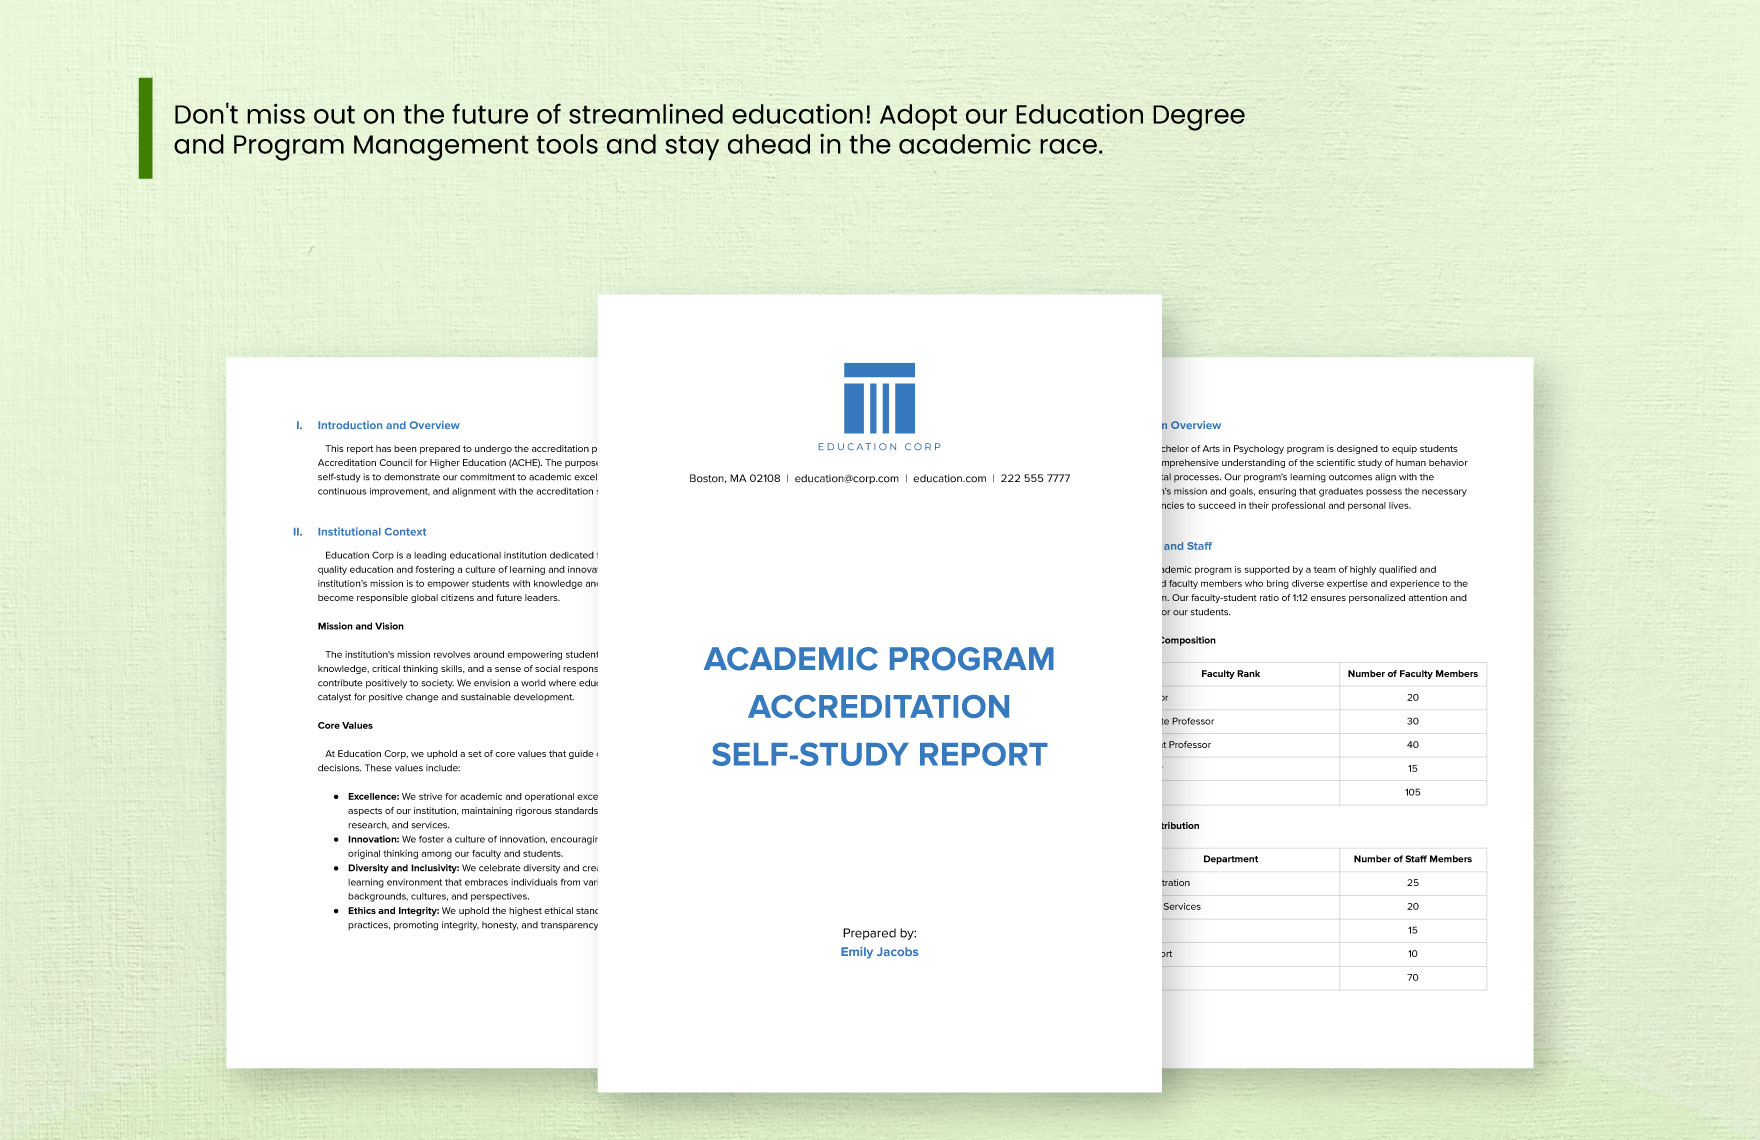 Academic Program Accreditation Self-Study Report Template